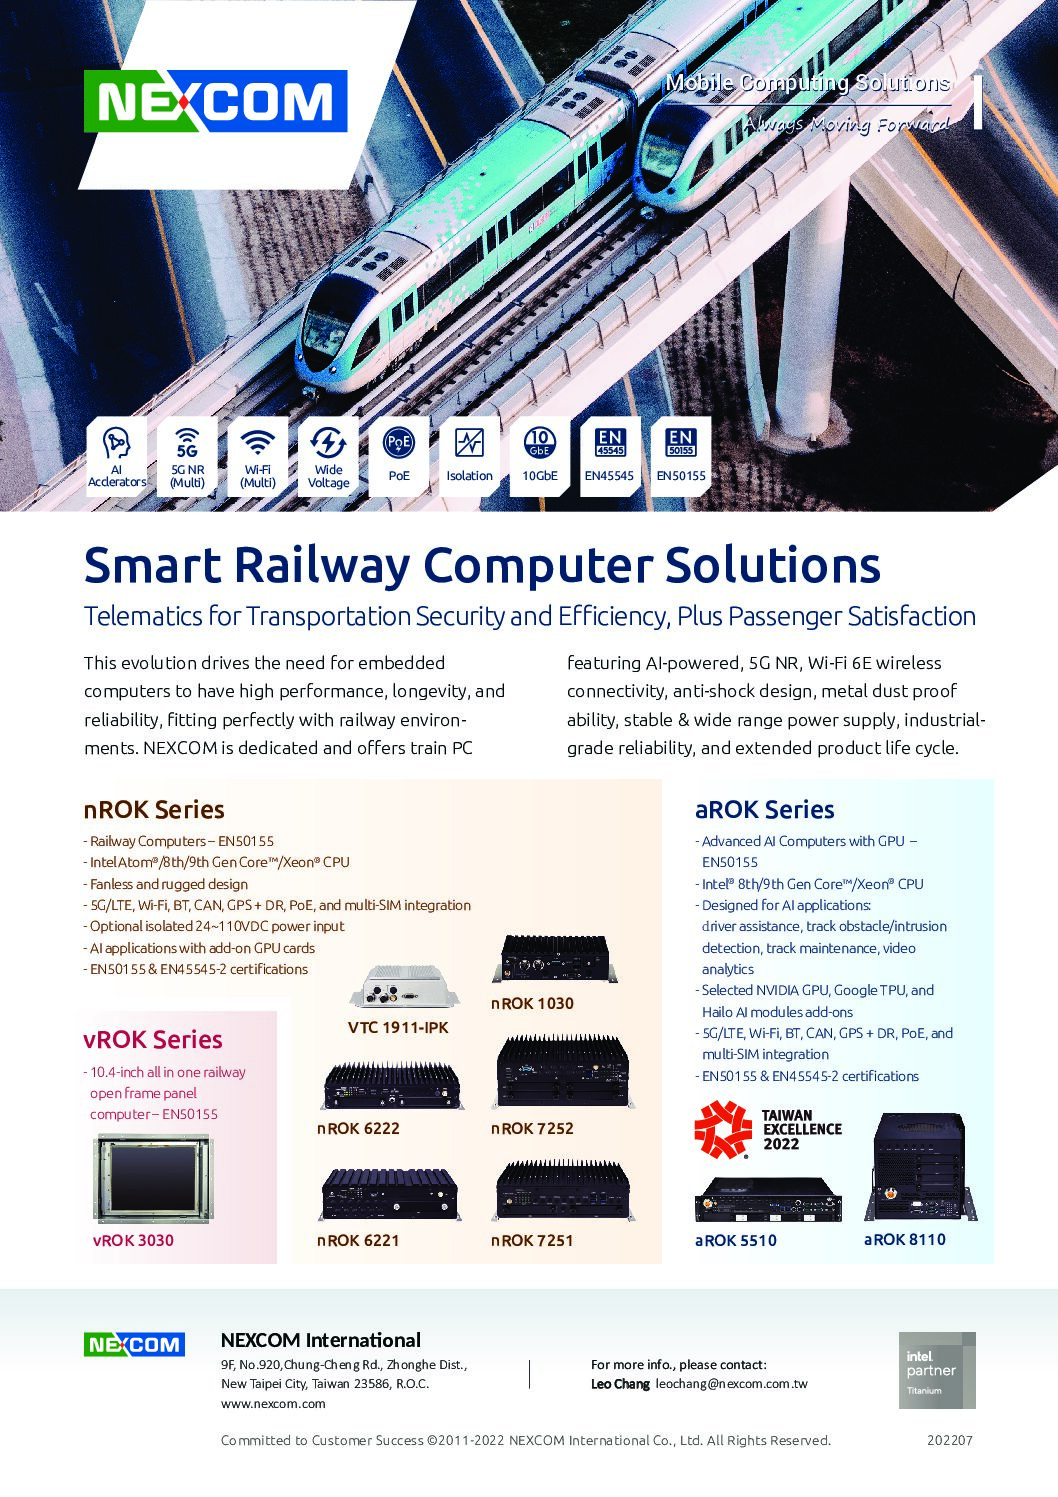 NEXCOM: Smart Railway Computer Solutions